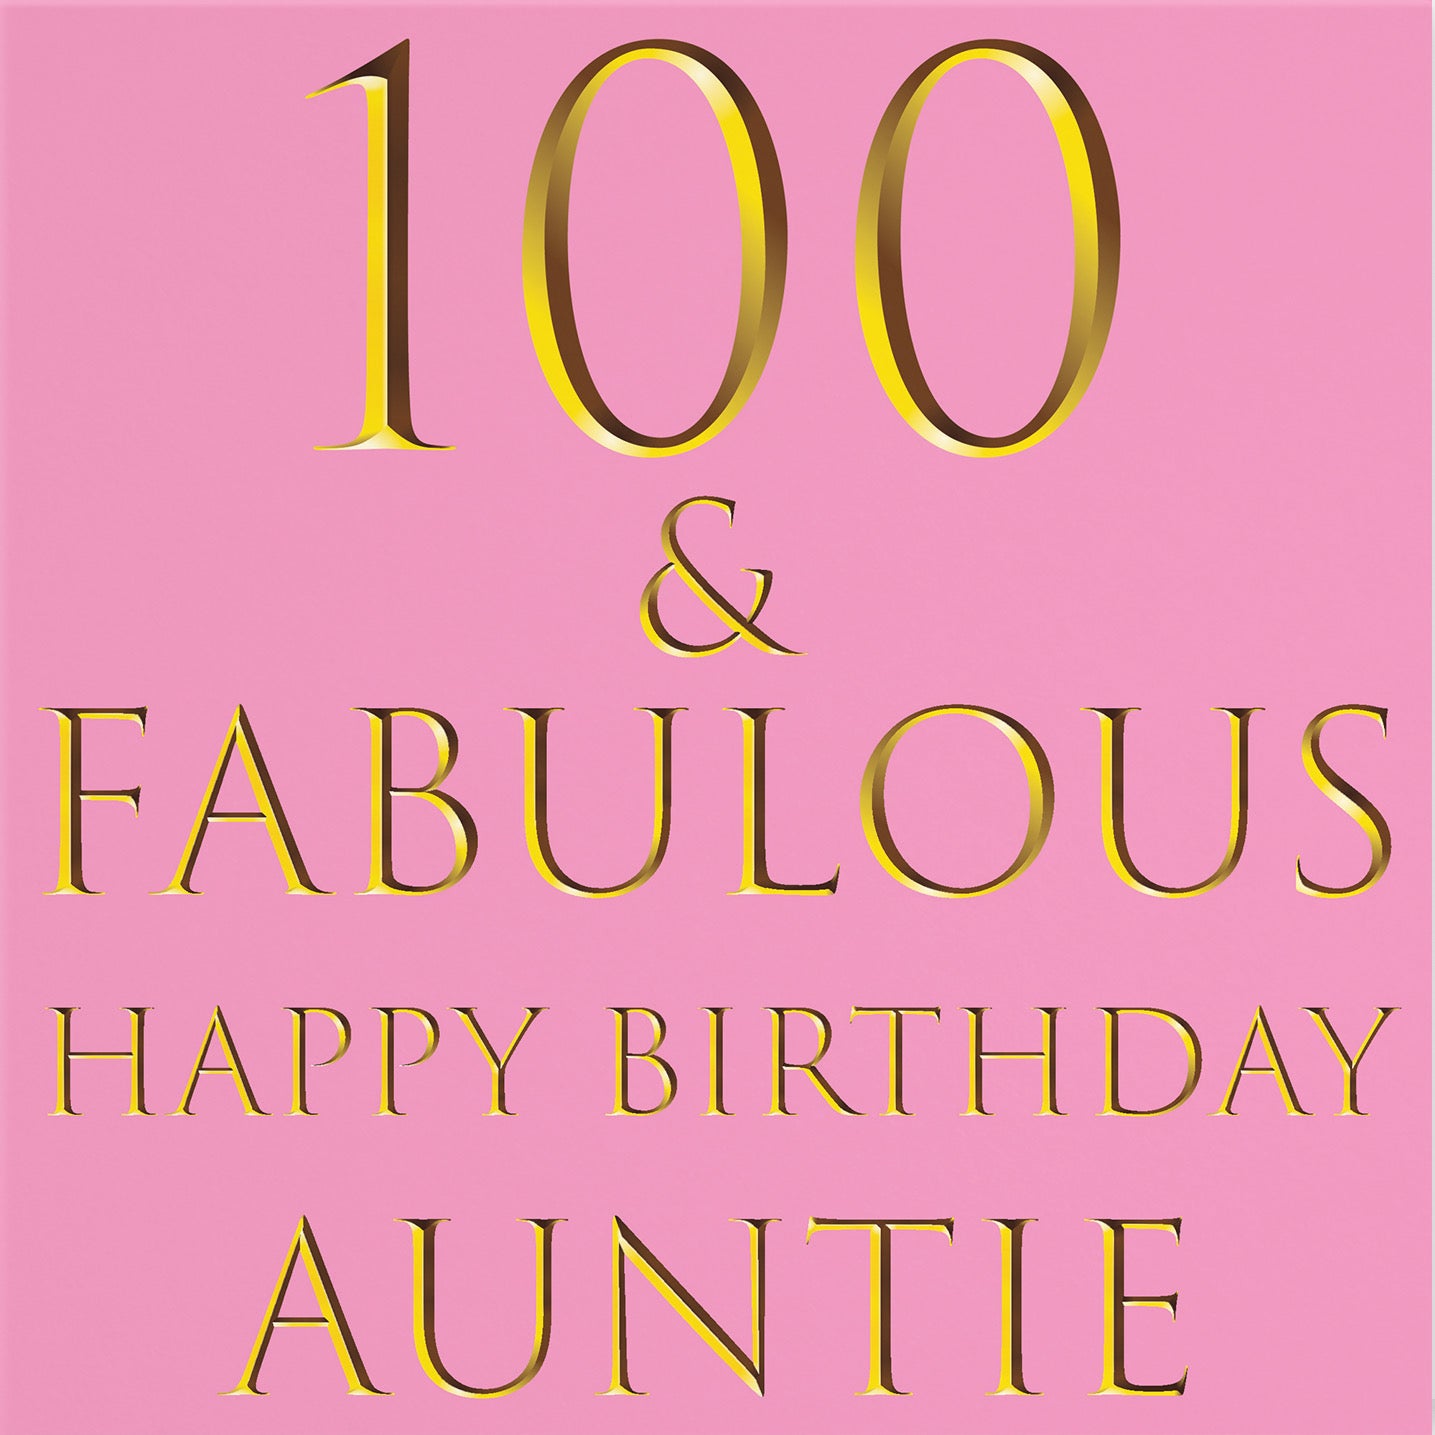 100th Auntie Birthday Card Still Totally Fabulous - Default Title (B08L1DH3LJ)